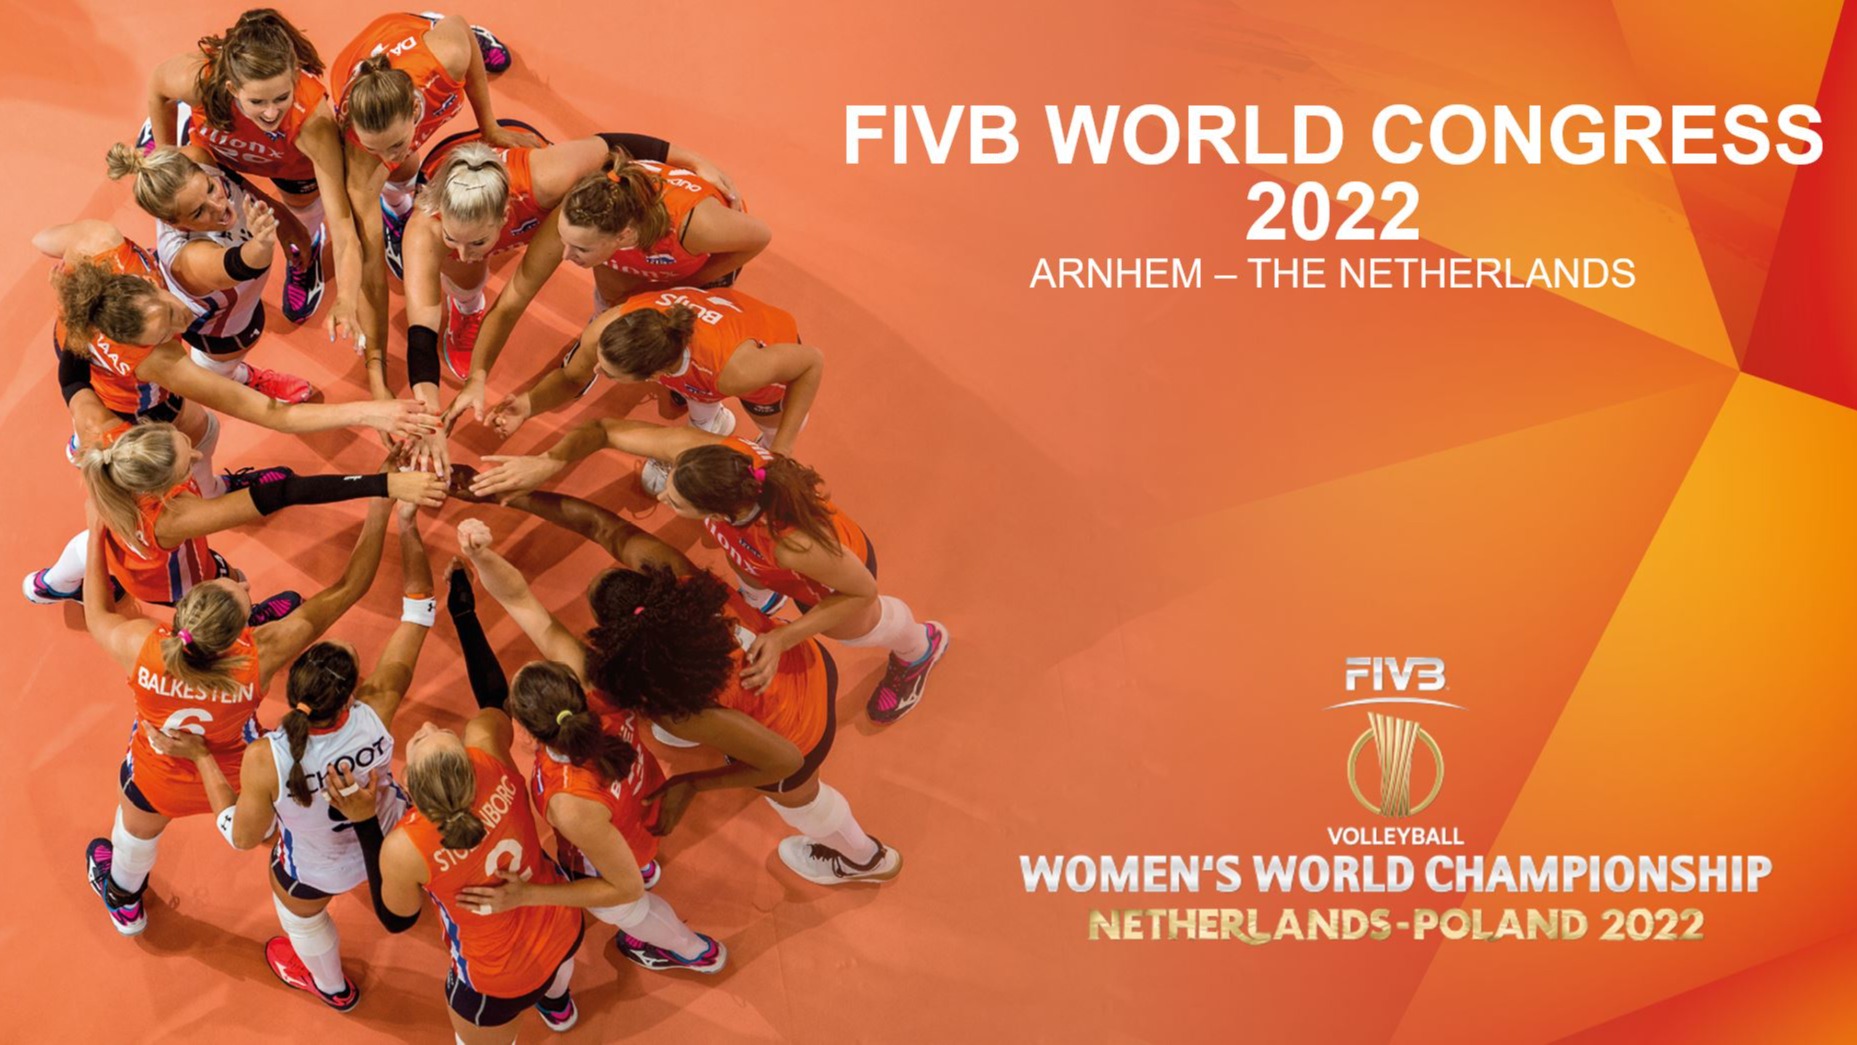 ARNHEM, NETHERLANDS TO HOST 38TH FIVB WORLD CONGRESS IN 2022